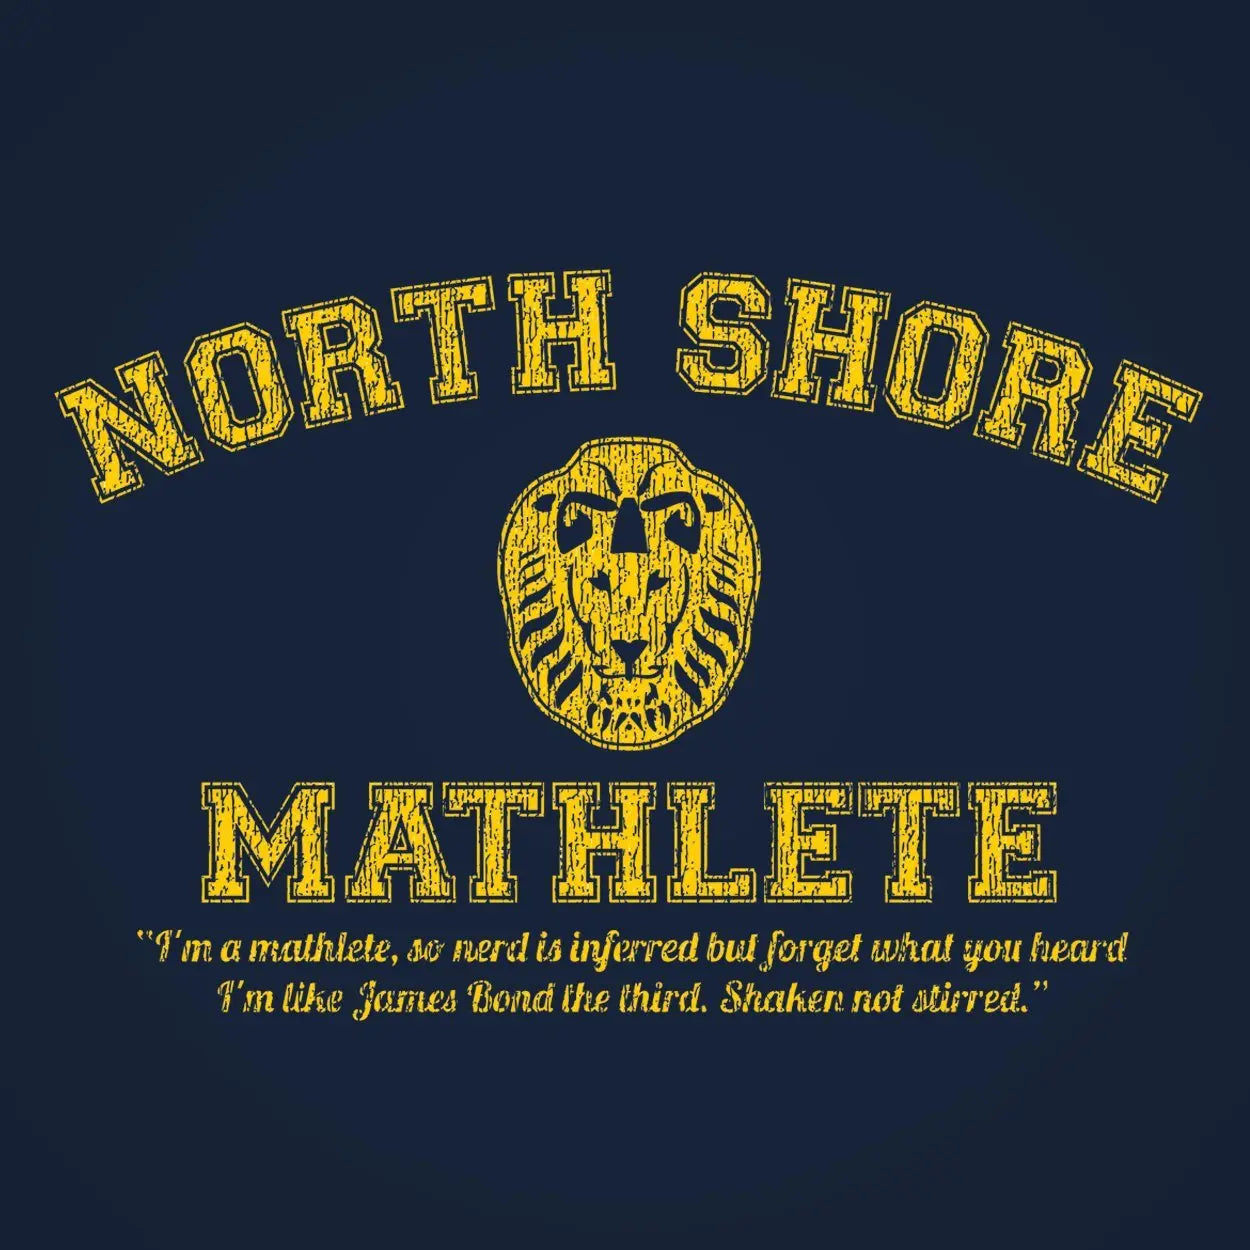 North Shore Mathlete Tshirt - Donkey Tees